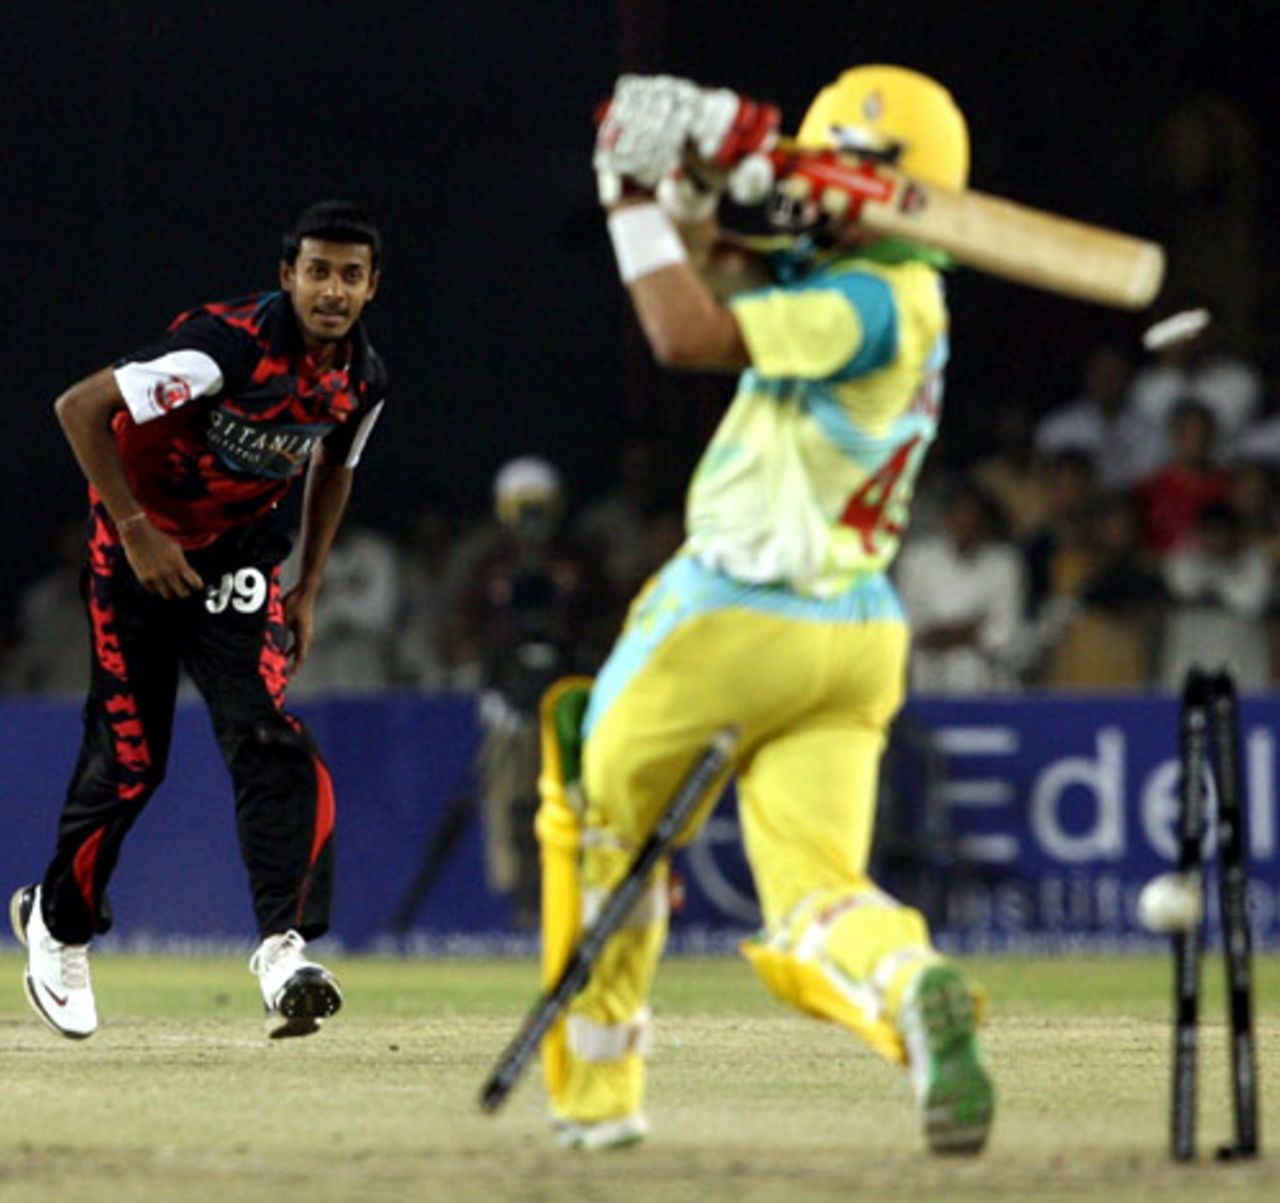 Abu Nechim scalped four, Chandigarh Lions v Kolkata Tigers, Indian Cricket League, Gurgaon, March 26, 2008